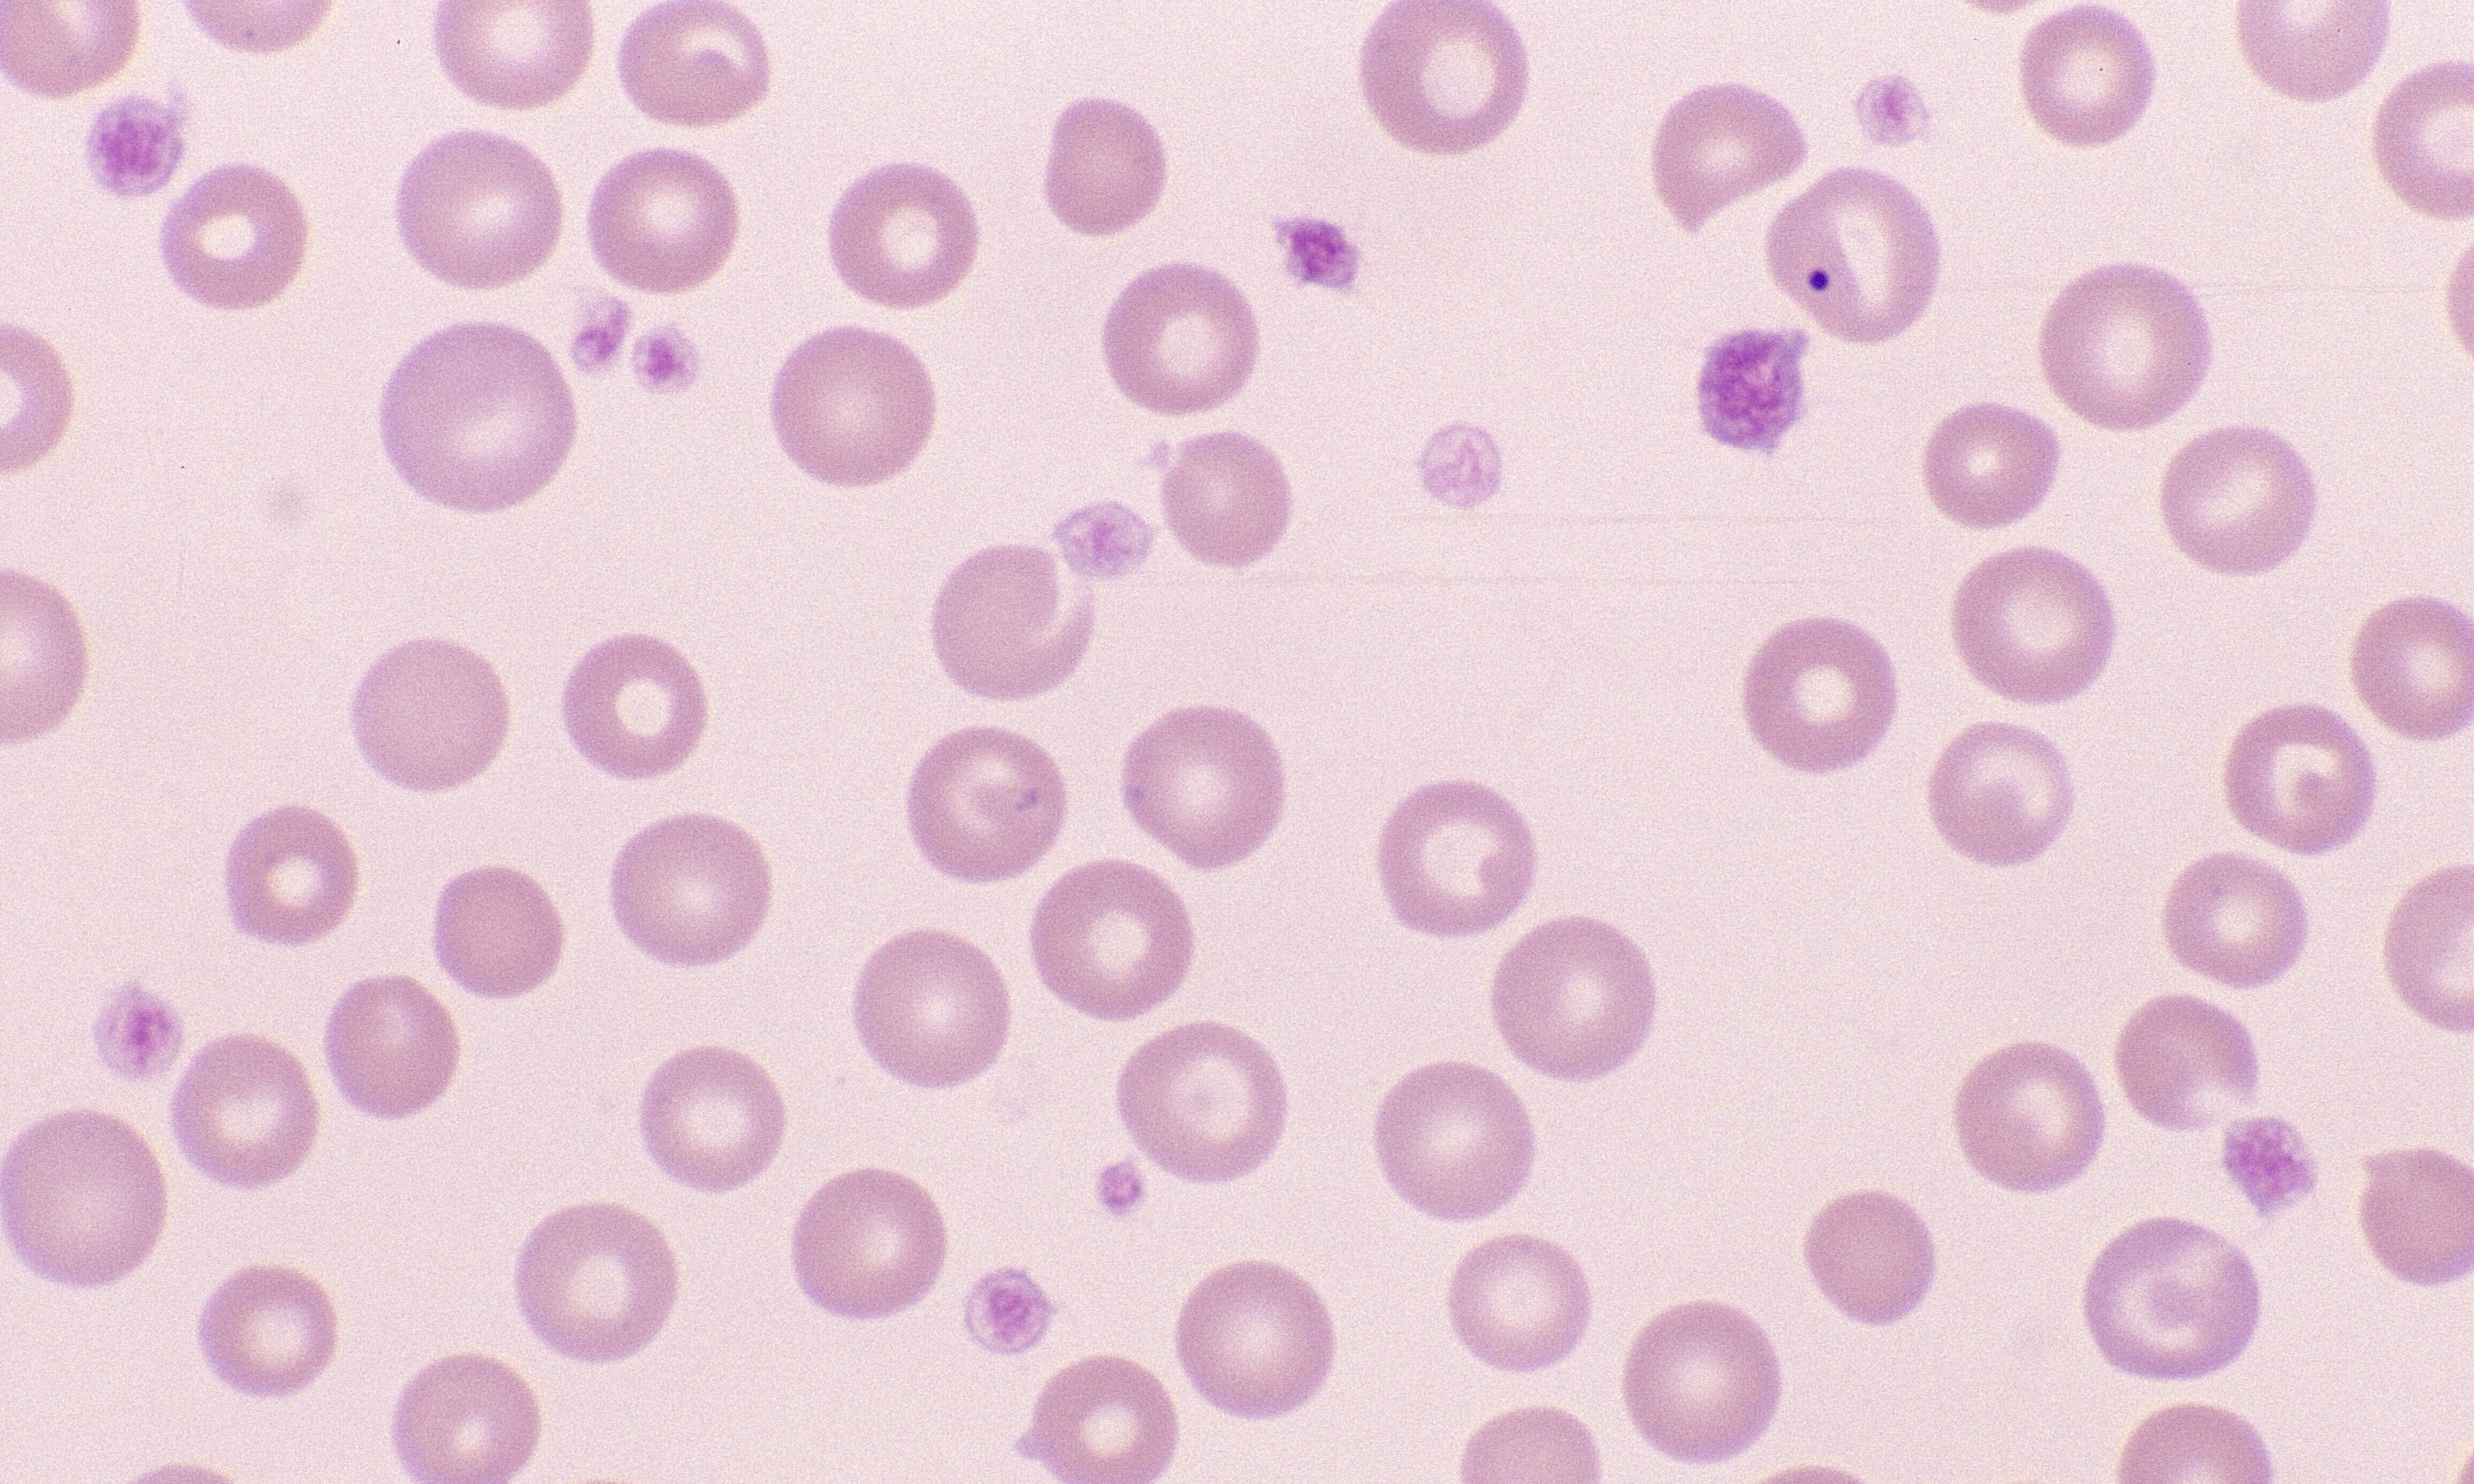 Platelets 1 (Canine 1 - Macrocytic Normochromic Anemia)